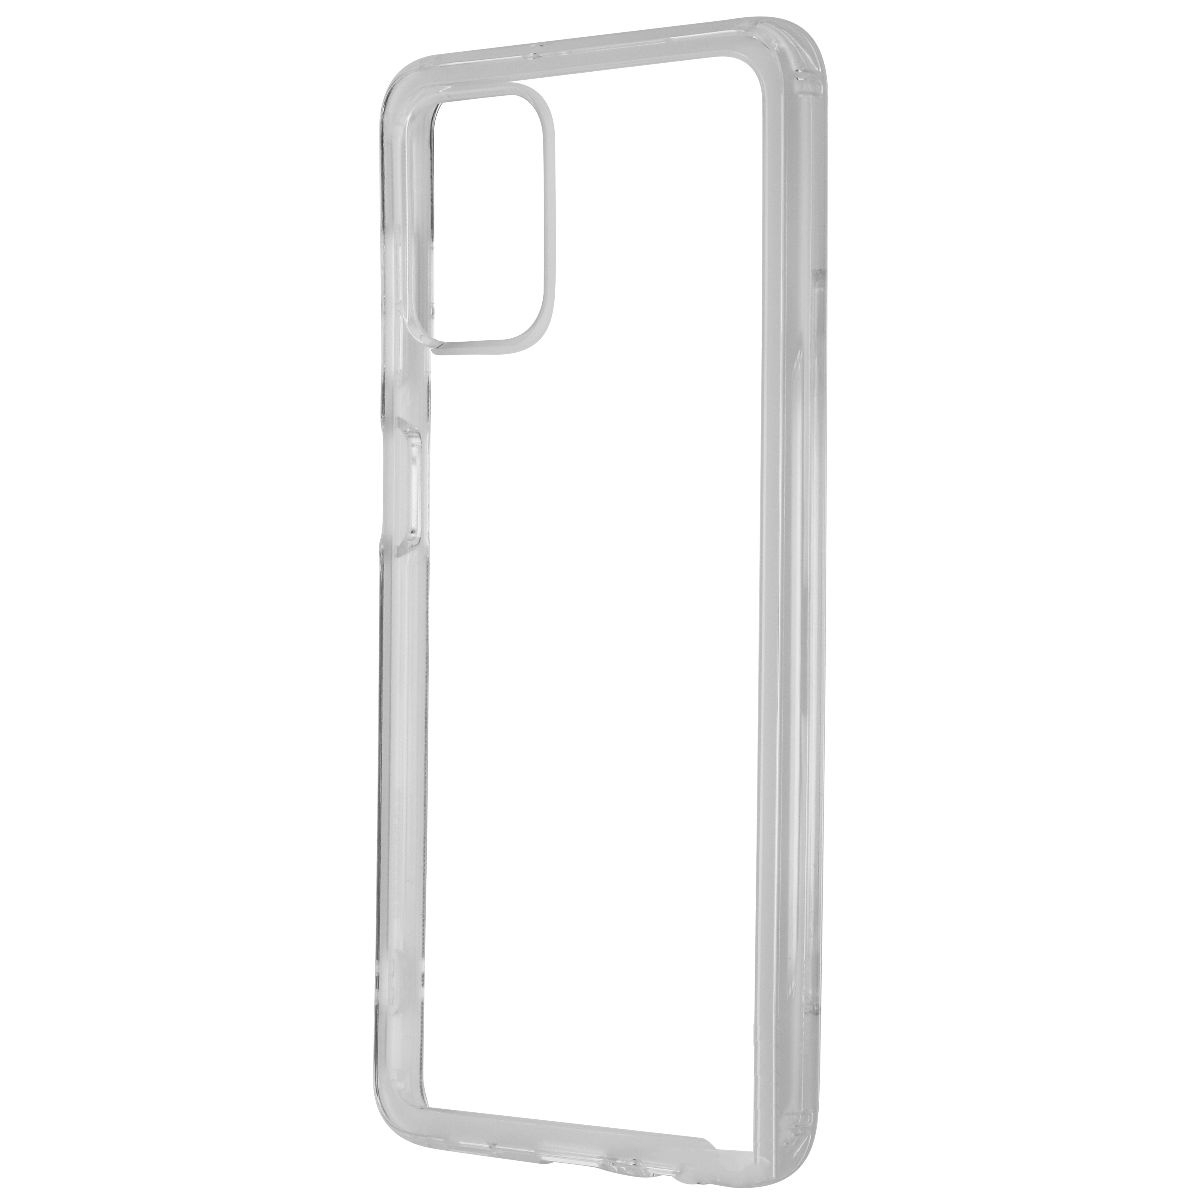 Samsung Soft Clear Cover For Galaxy A12 Smartphones - Clear (EF-QA125TTEVZW)